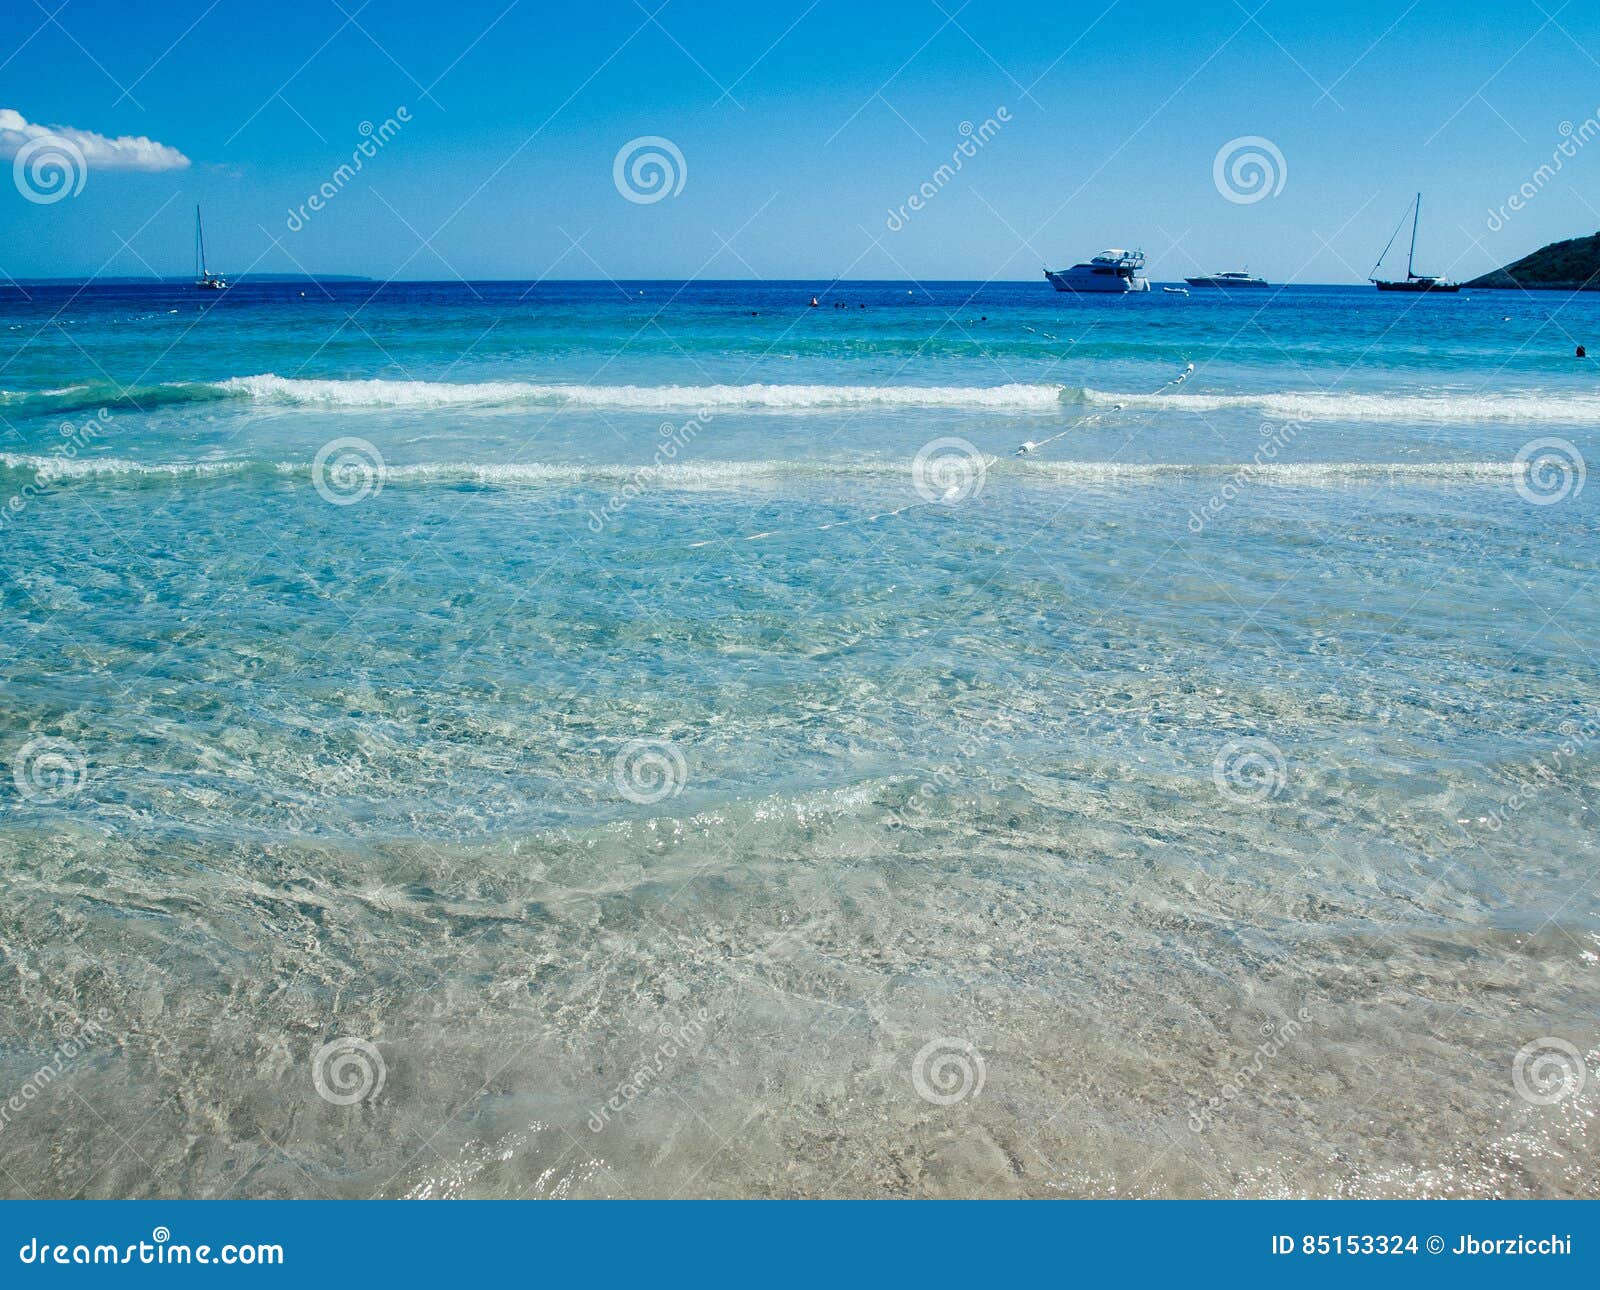 beach of salinas, ibiza, spain